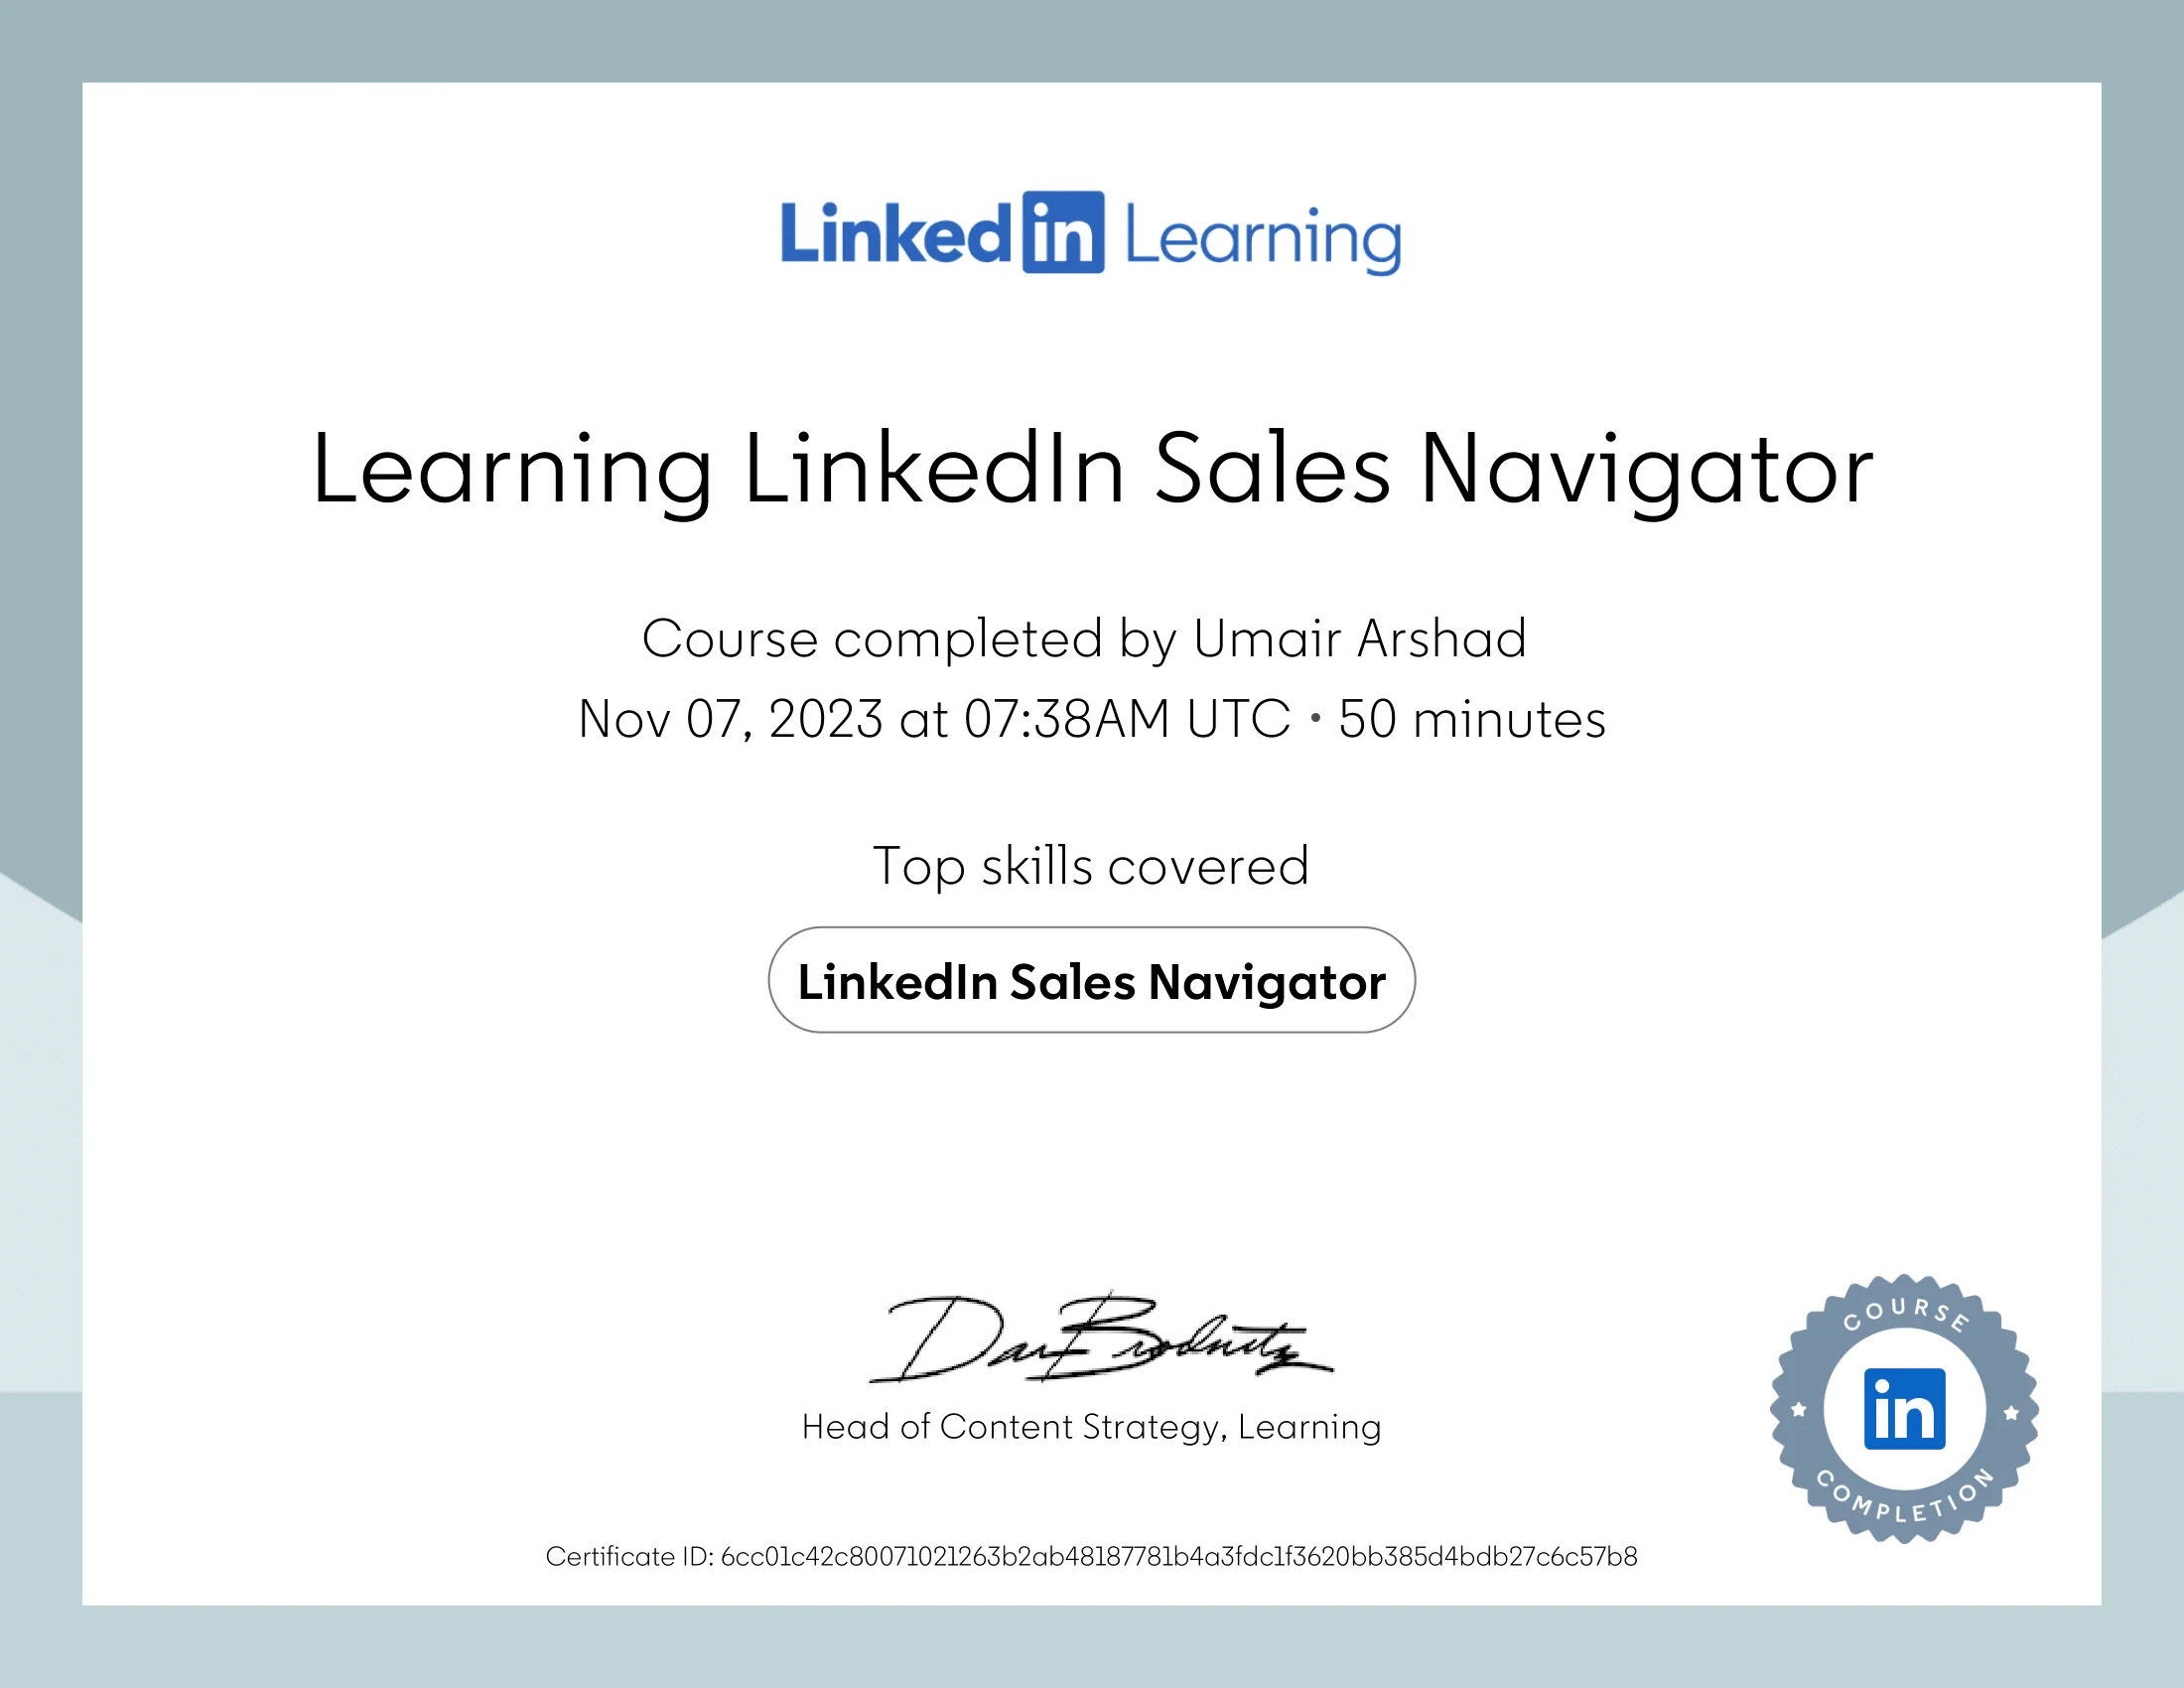 Certificate Of Completion_Learning LinkedIn Sales Navigator